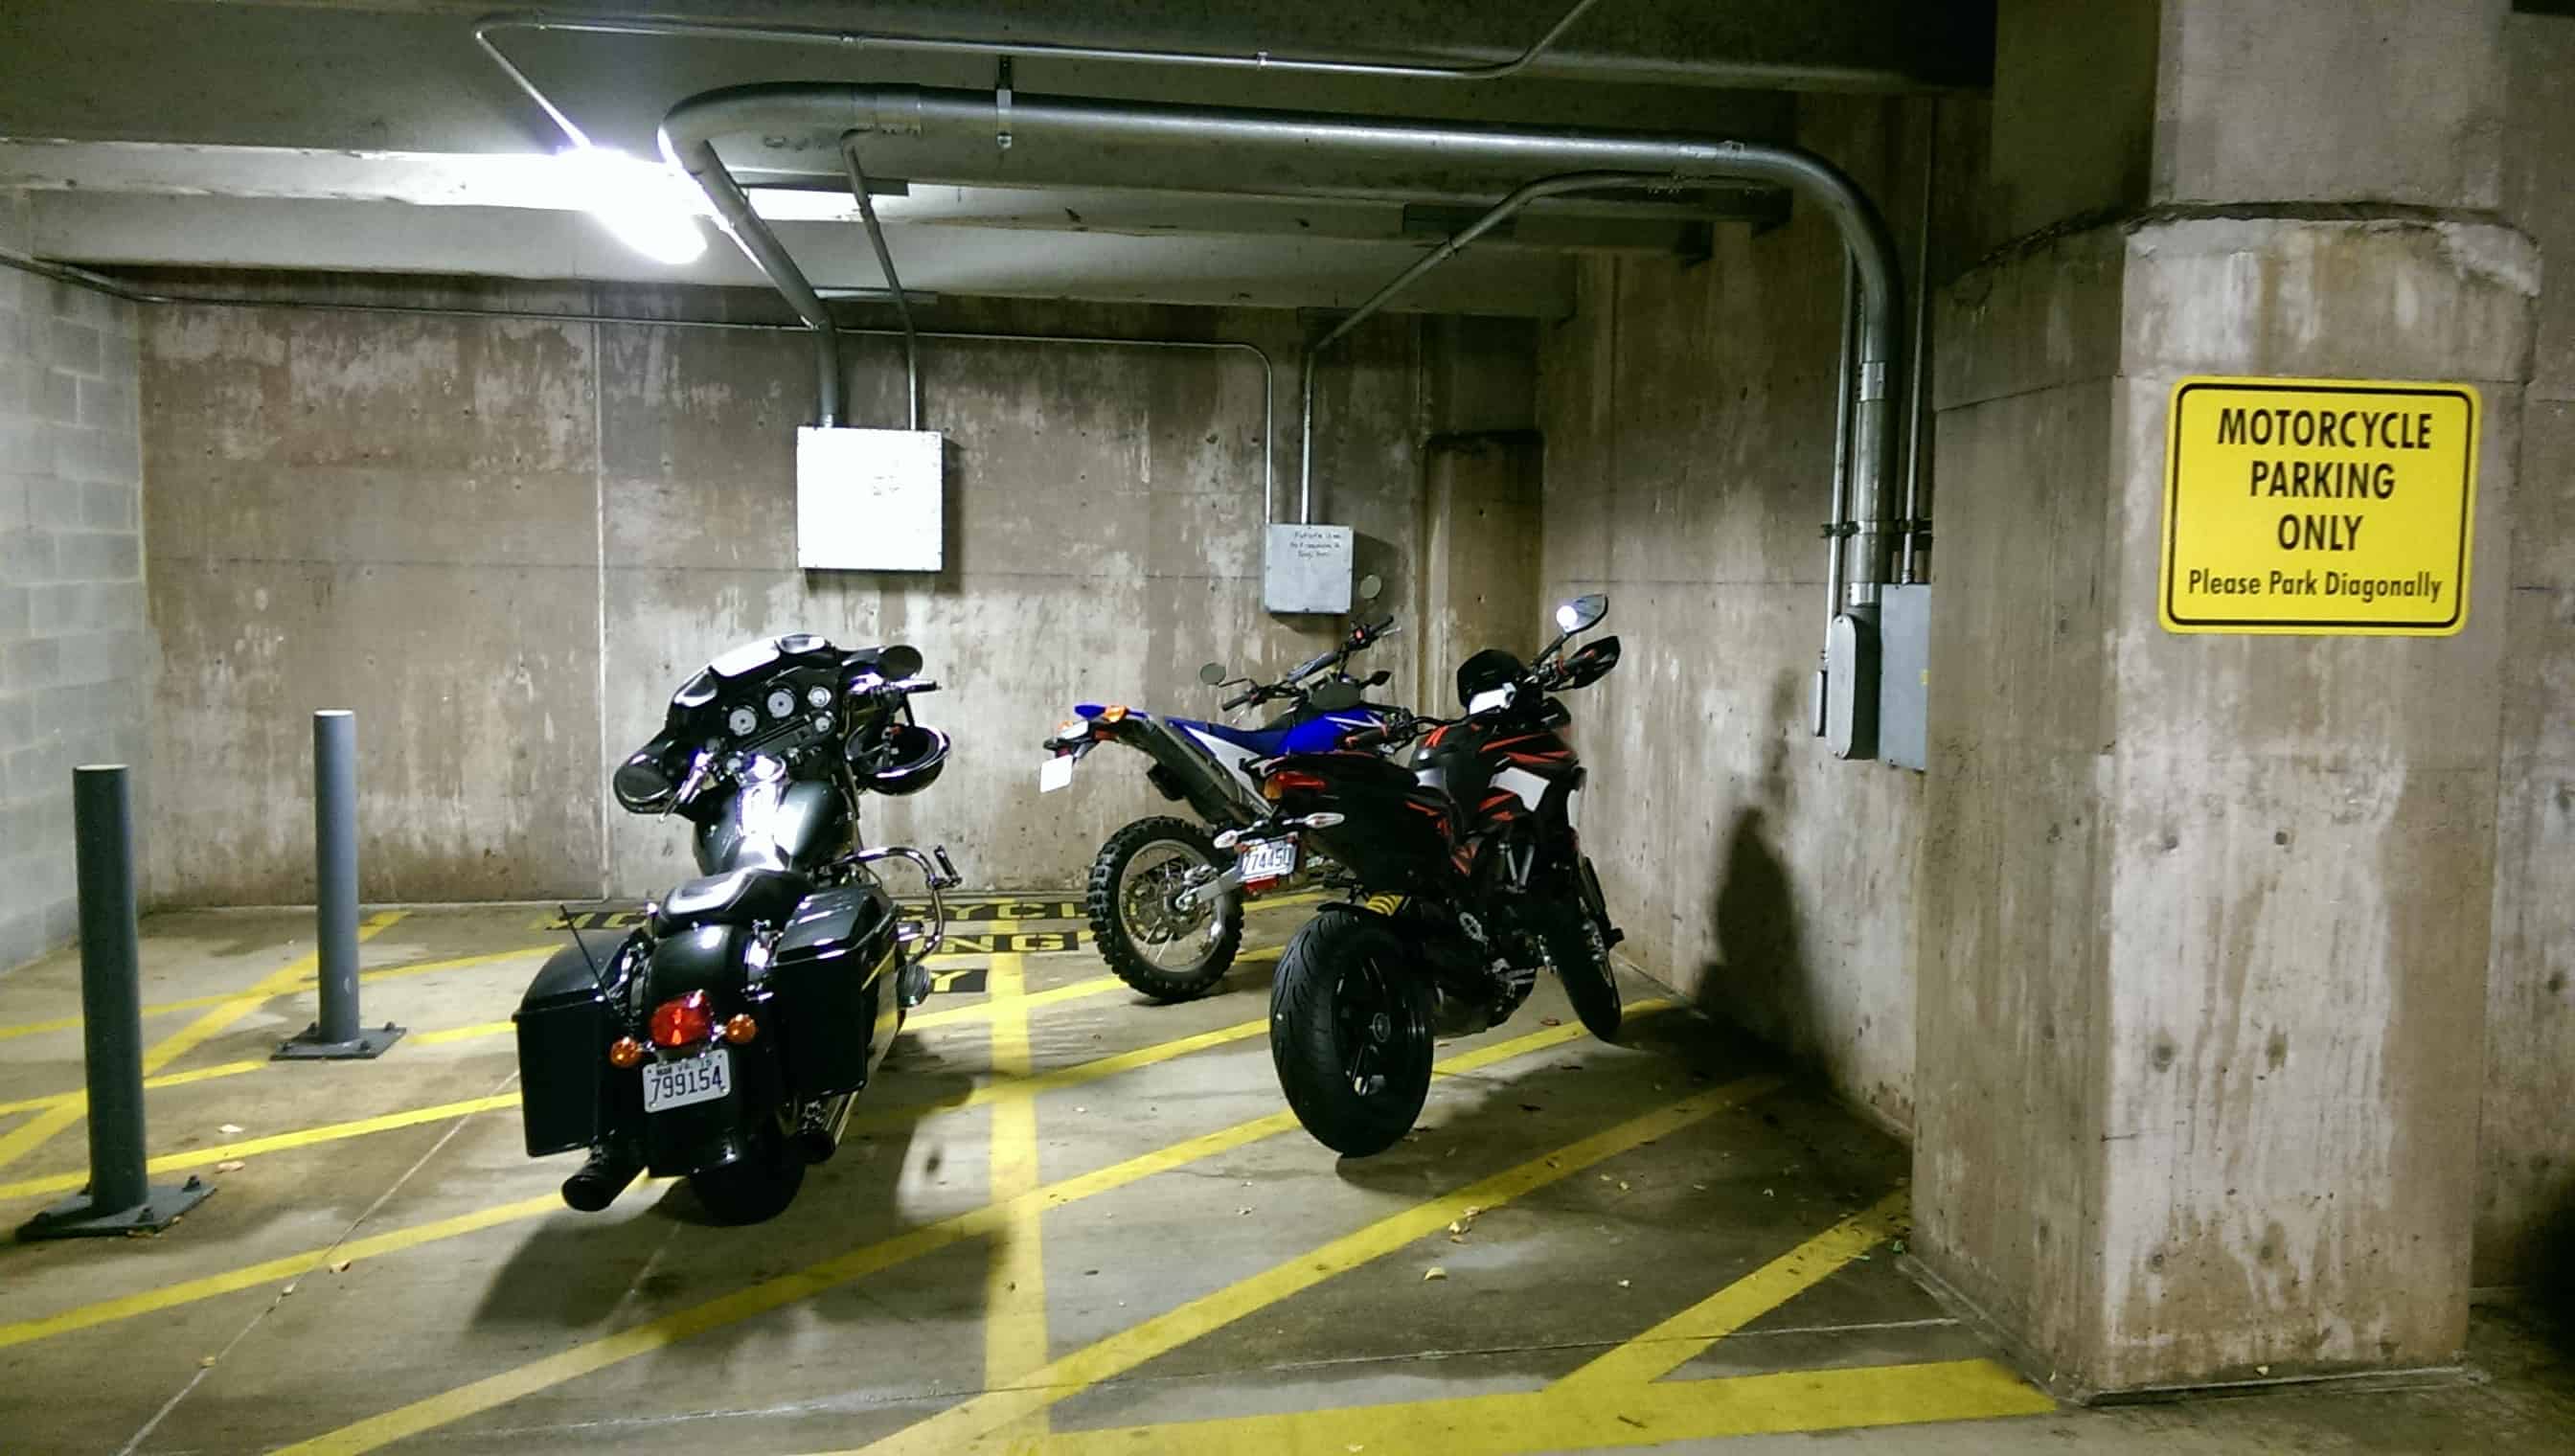 Выбираем место для хранения мотоцикла